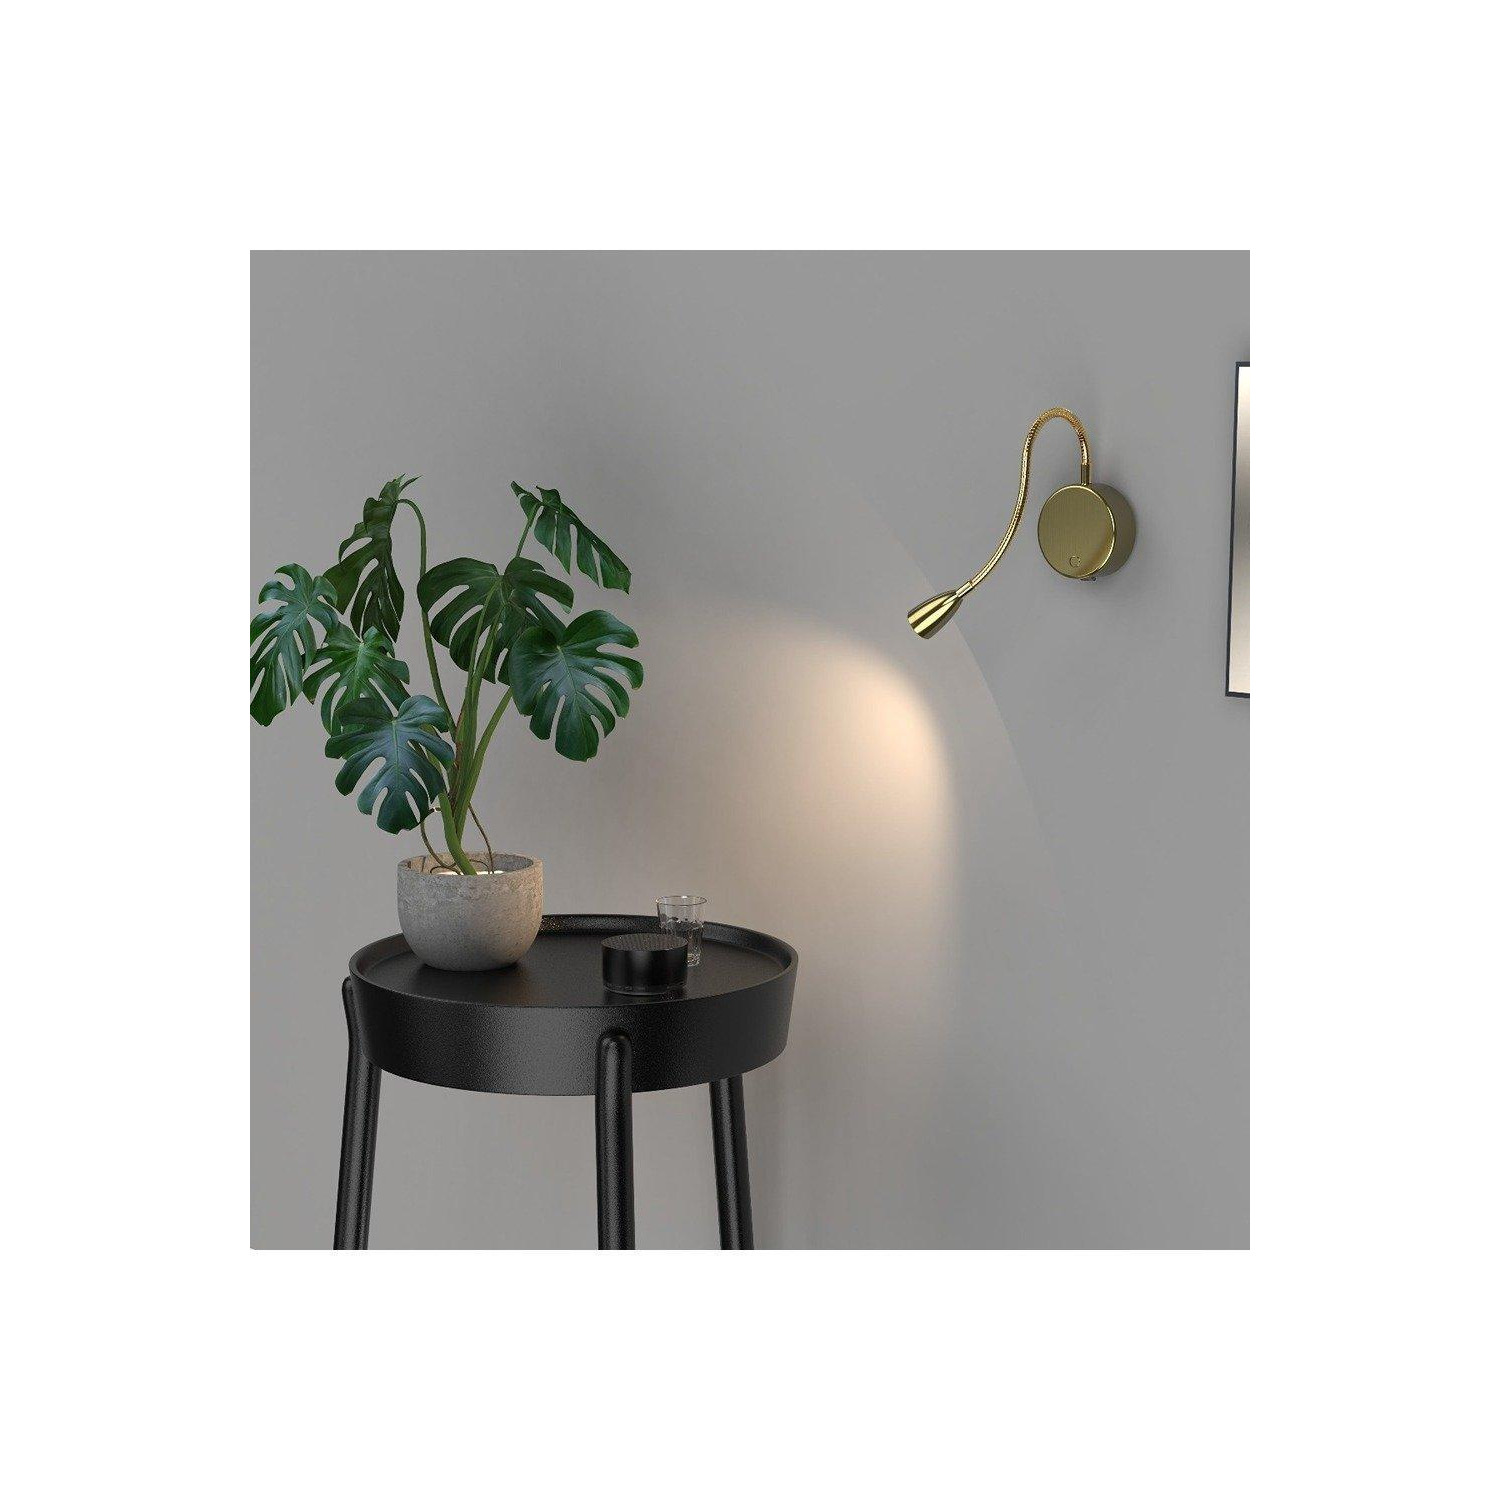 CGC Lighting 'Matilda' Satin Gold Adjustable Flexible Neck LED Rechargeable Magnetic USB Reading Bedside Wall Light - image 1